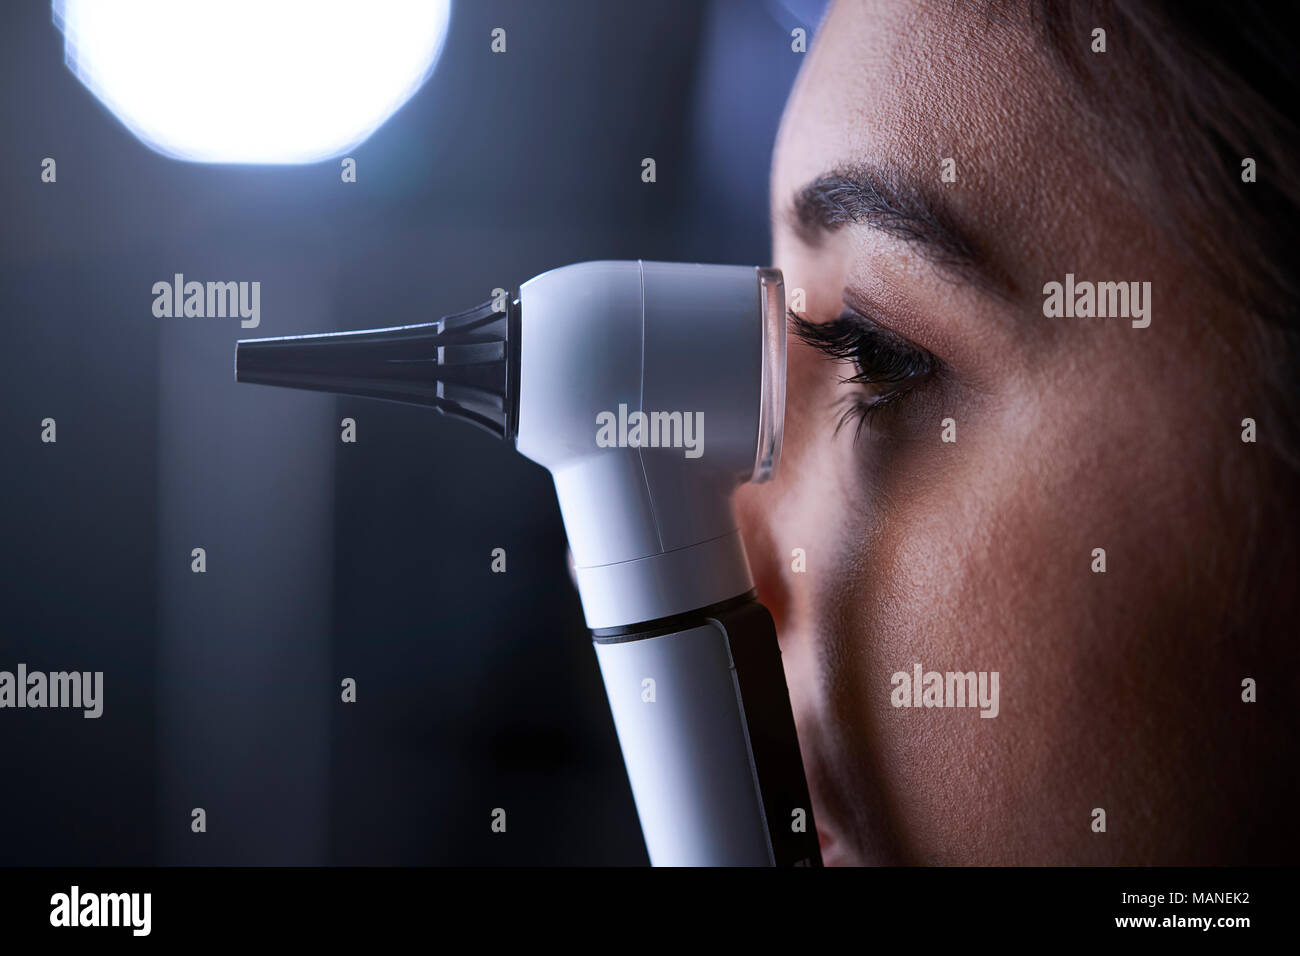 Doctora mediante otoscopio para examen, vista lateral Foto de stock